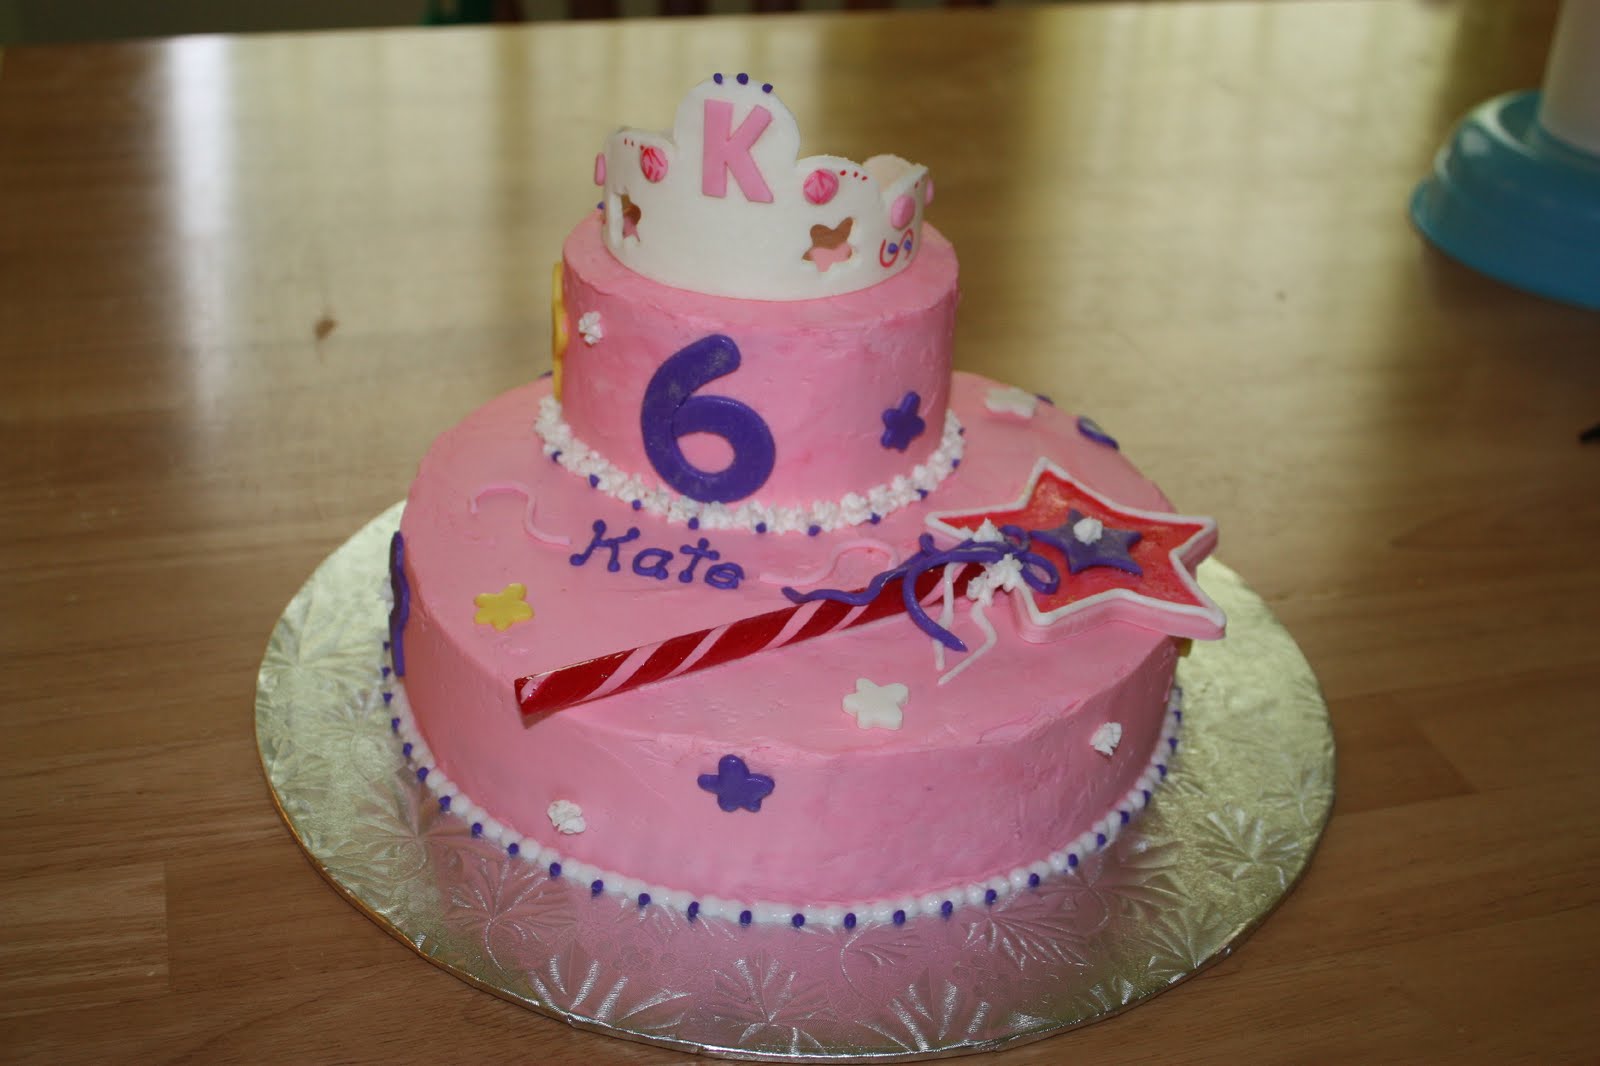 6 Year Old Birthday Cake Ideas - A Birthday Cake